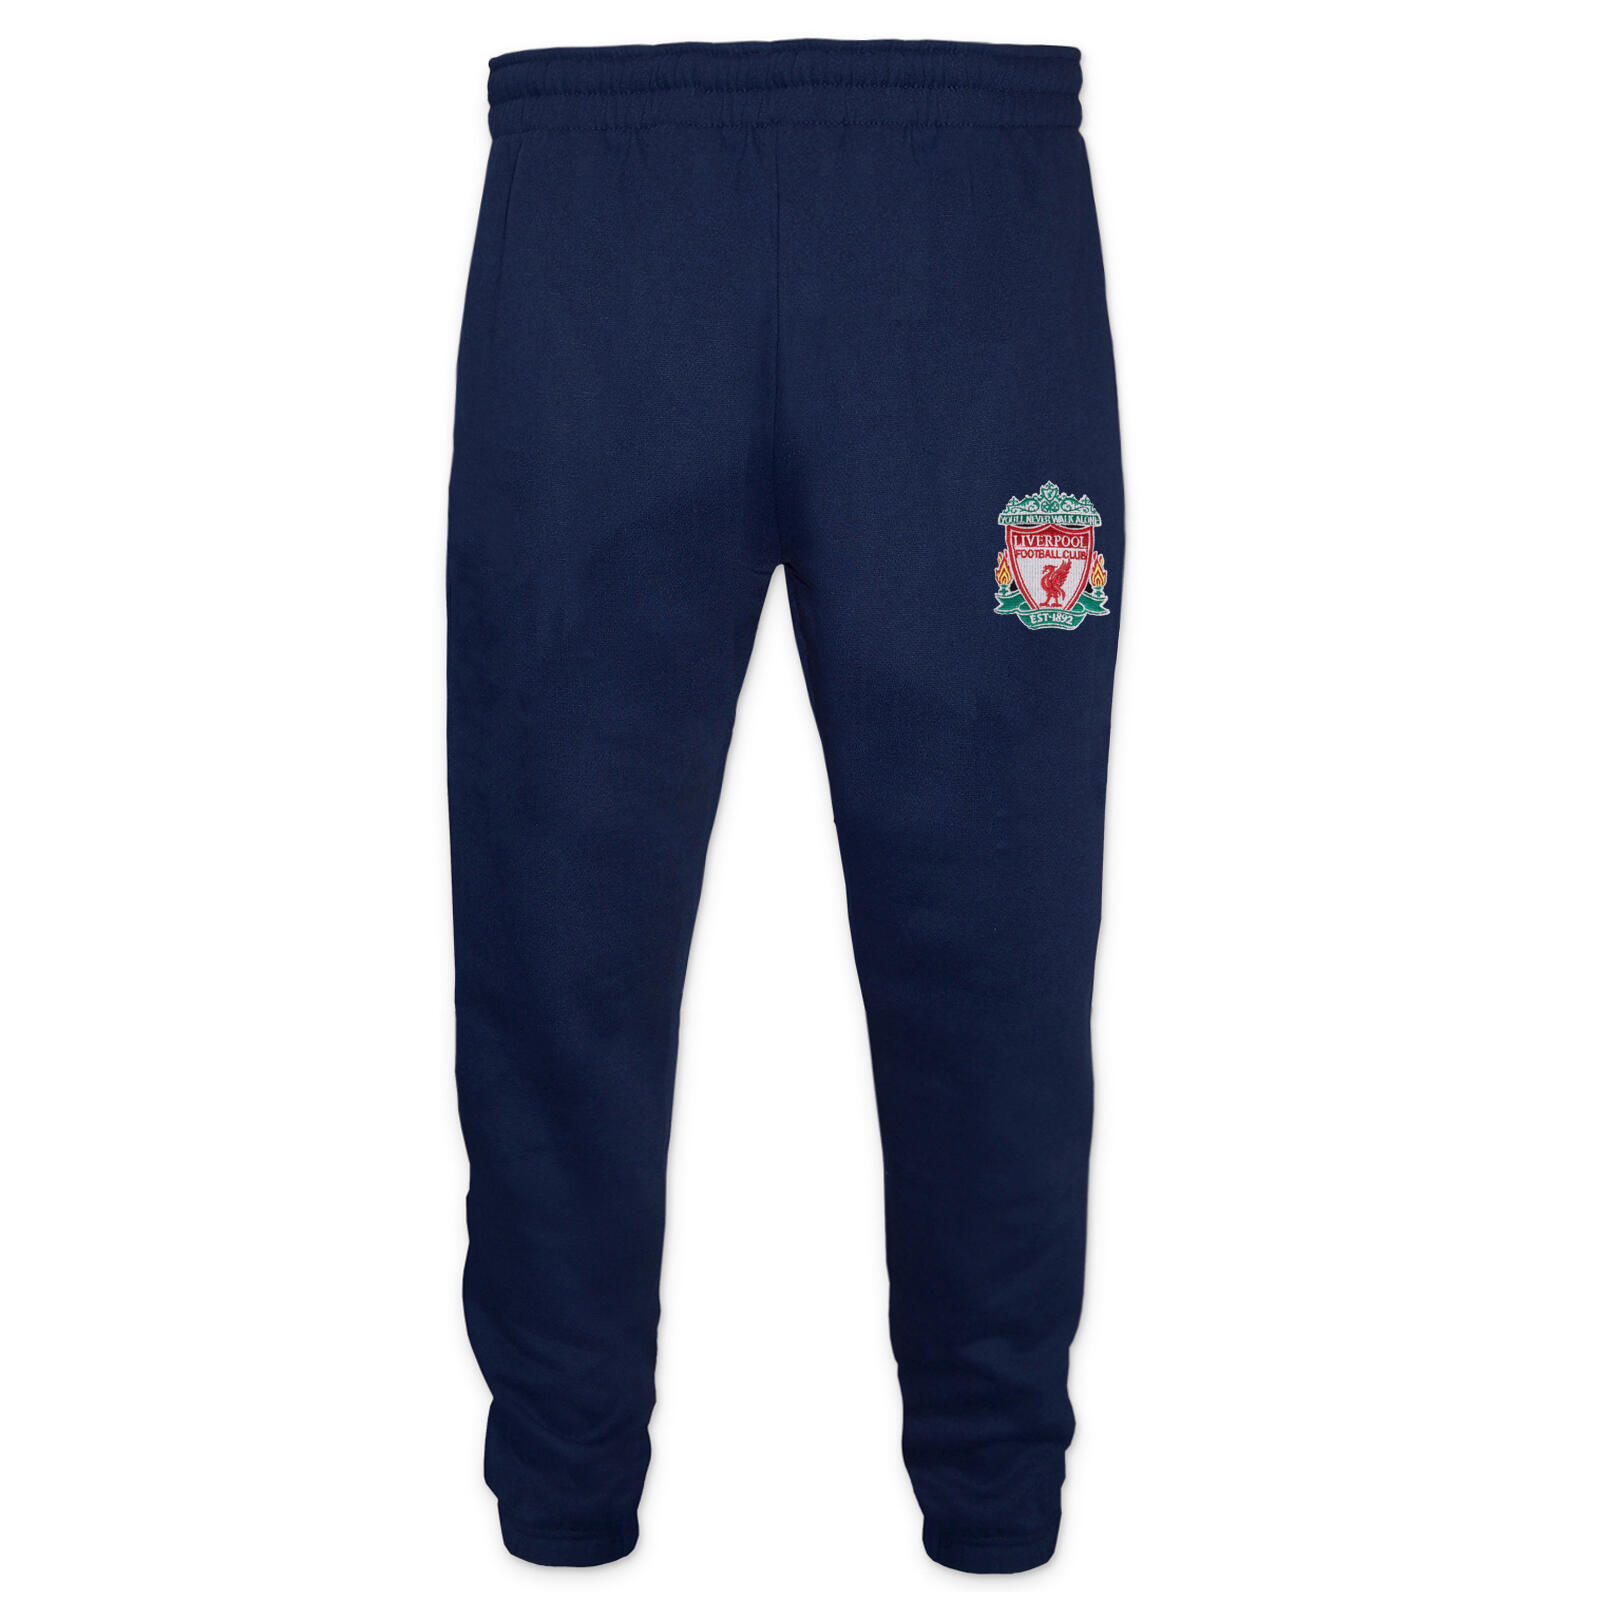 LIVERPOOL FC Liverpool FC Boys Joggers Jog Pants Slim Fit Fleece Kids OFFICIAL Football Gift